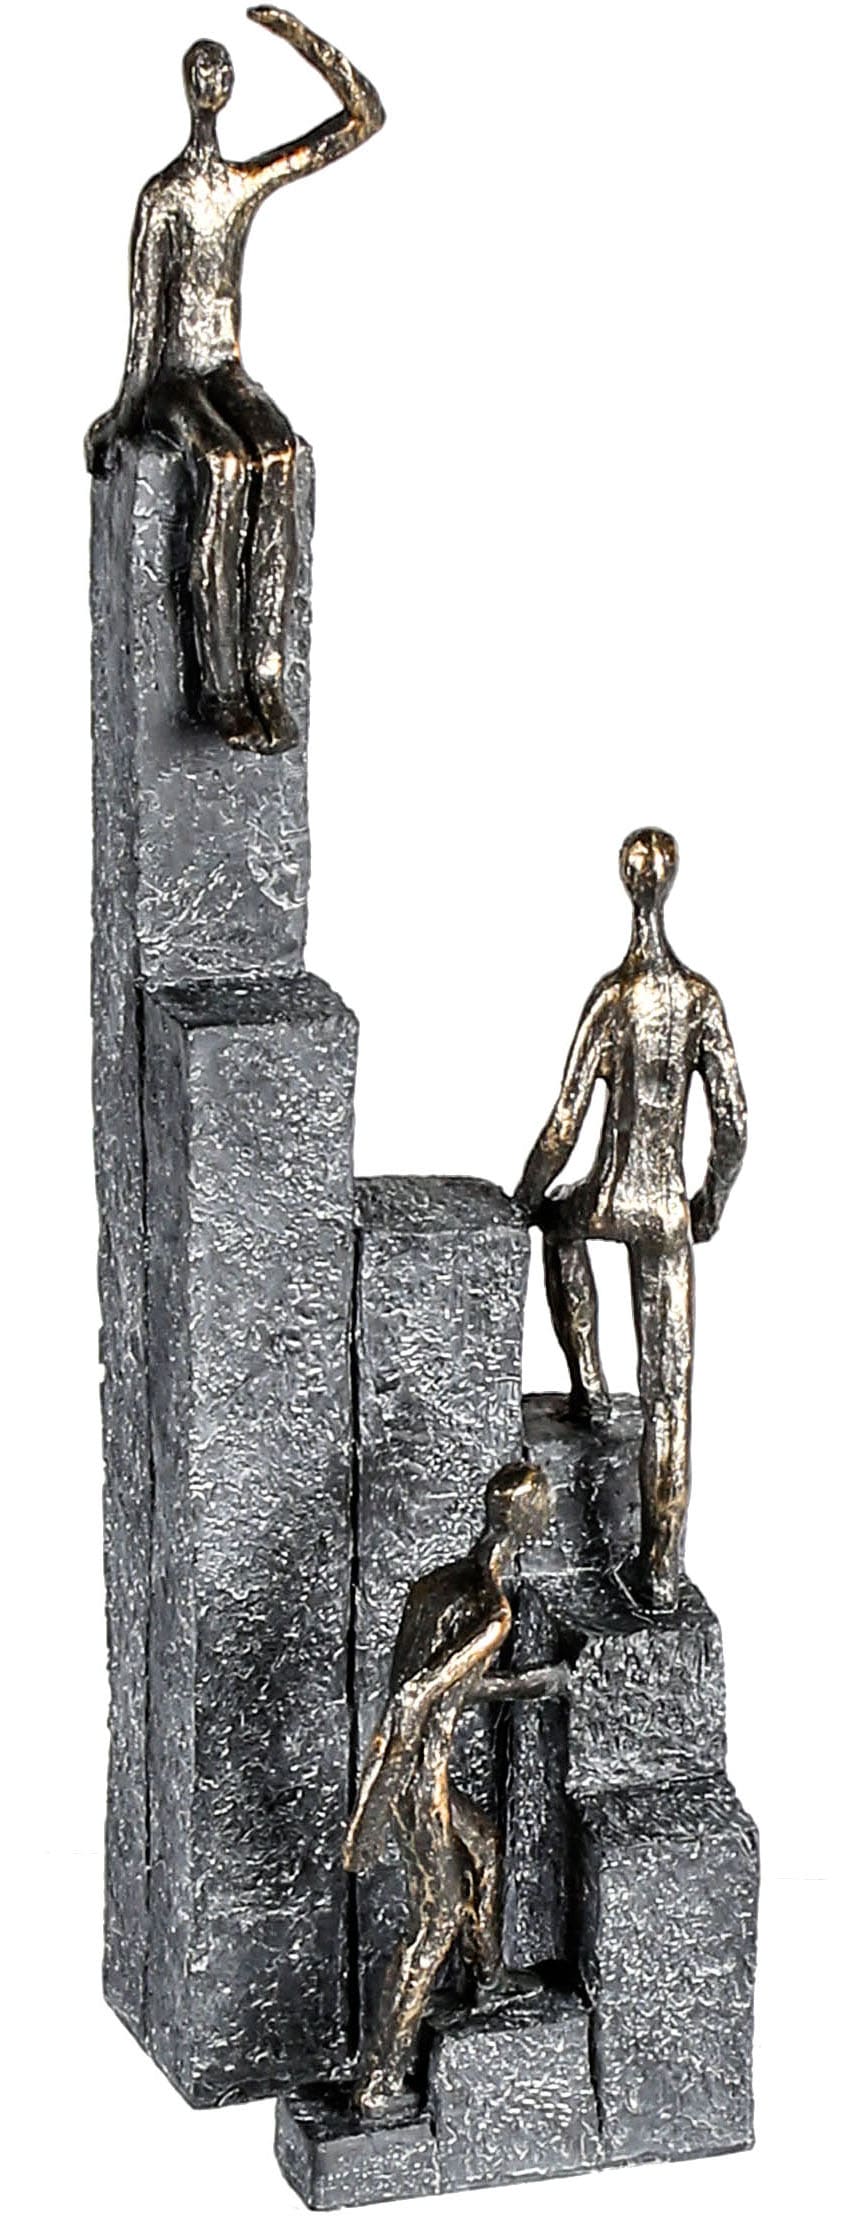 Dekofigur »Skulptur Climbing, bronzefarben/grau«, bronzefarben/grau, Polyresin